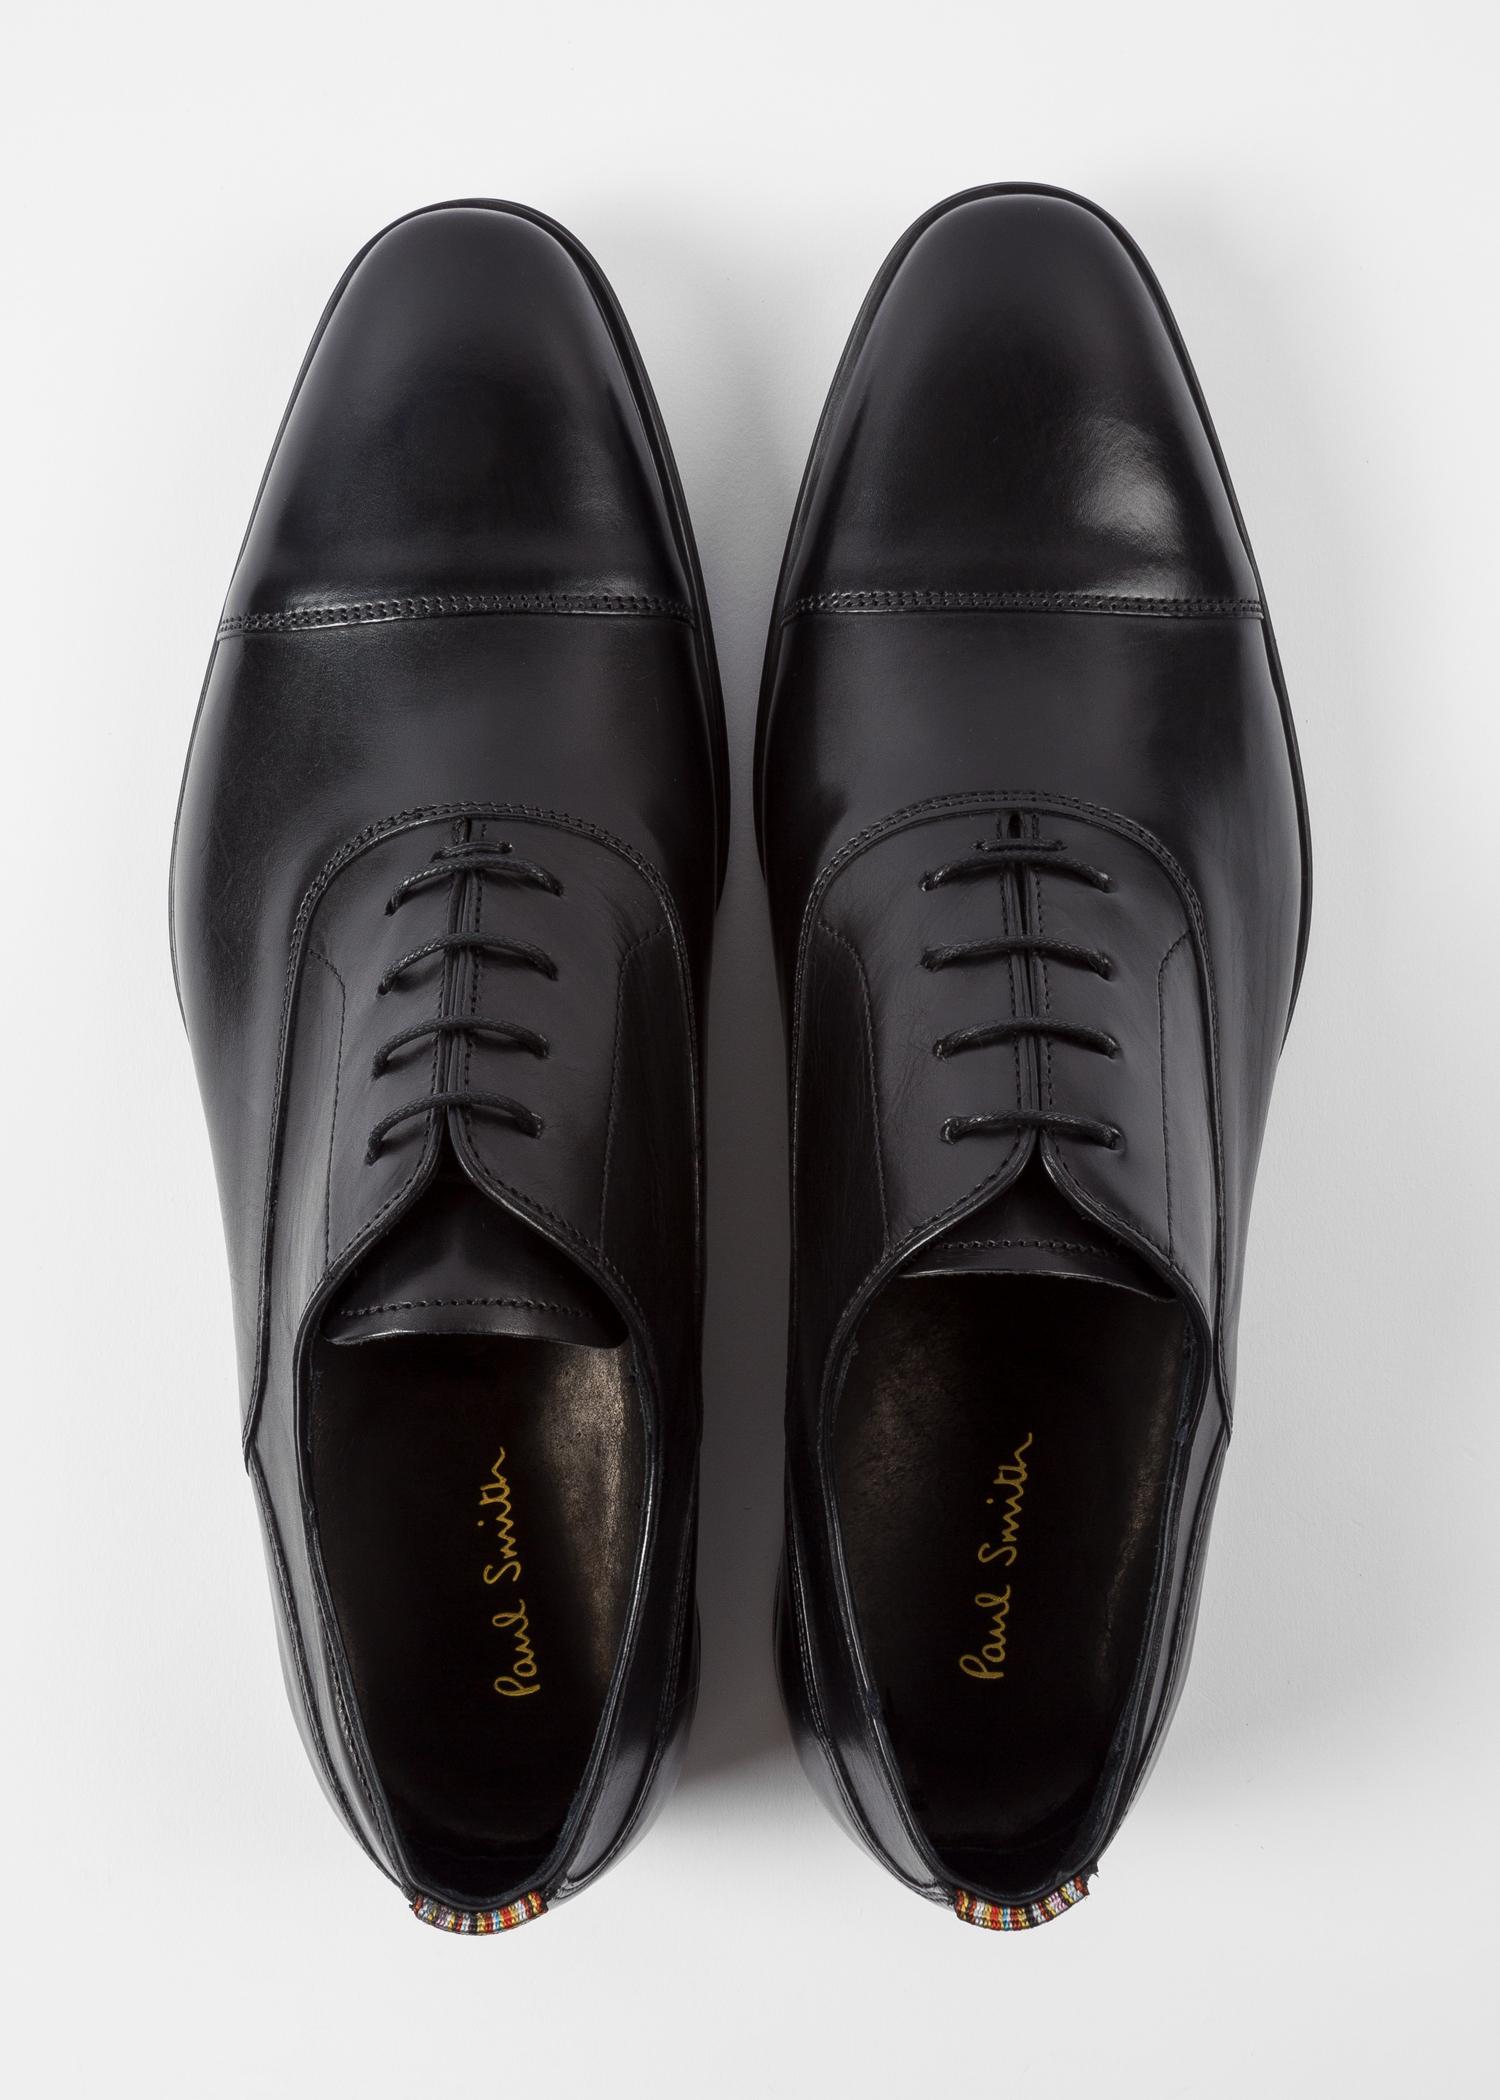 A Paul Smith black shoes